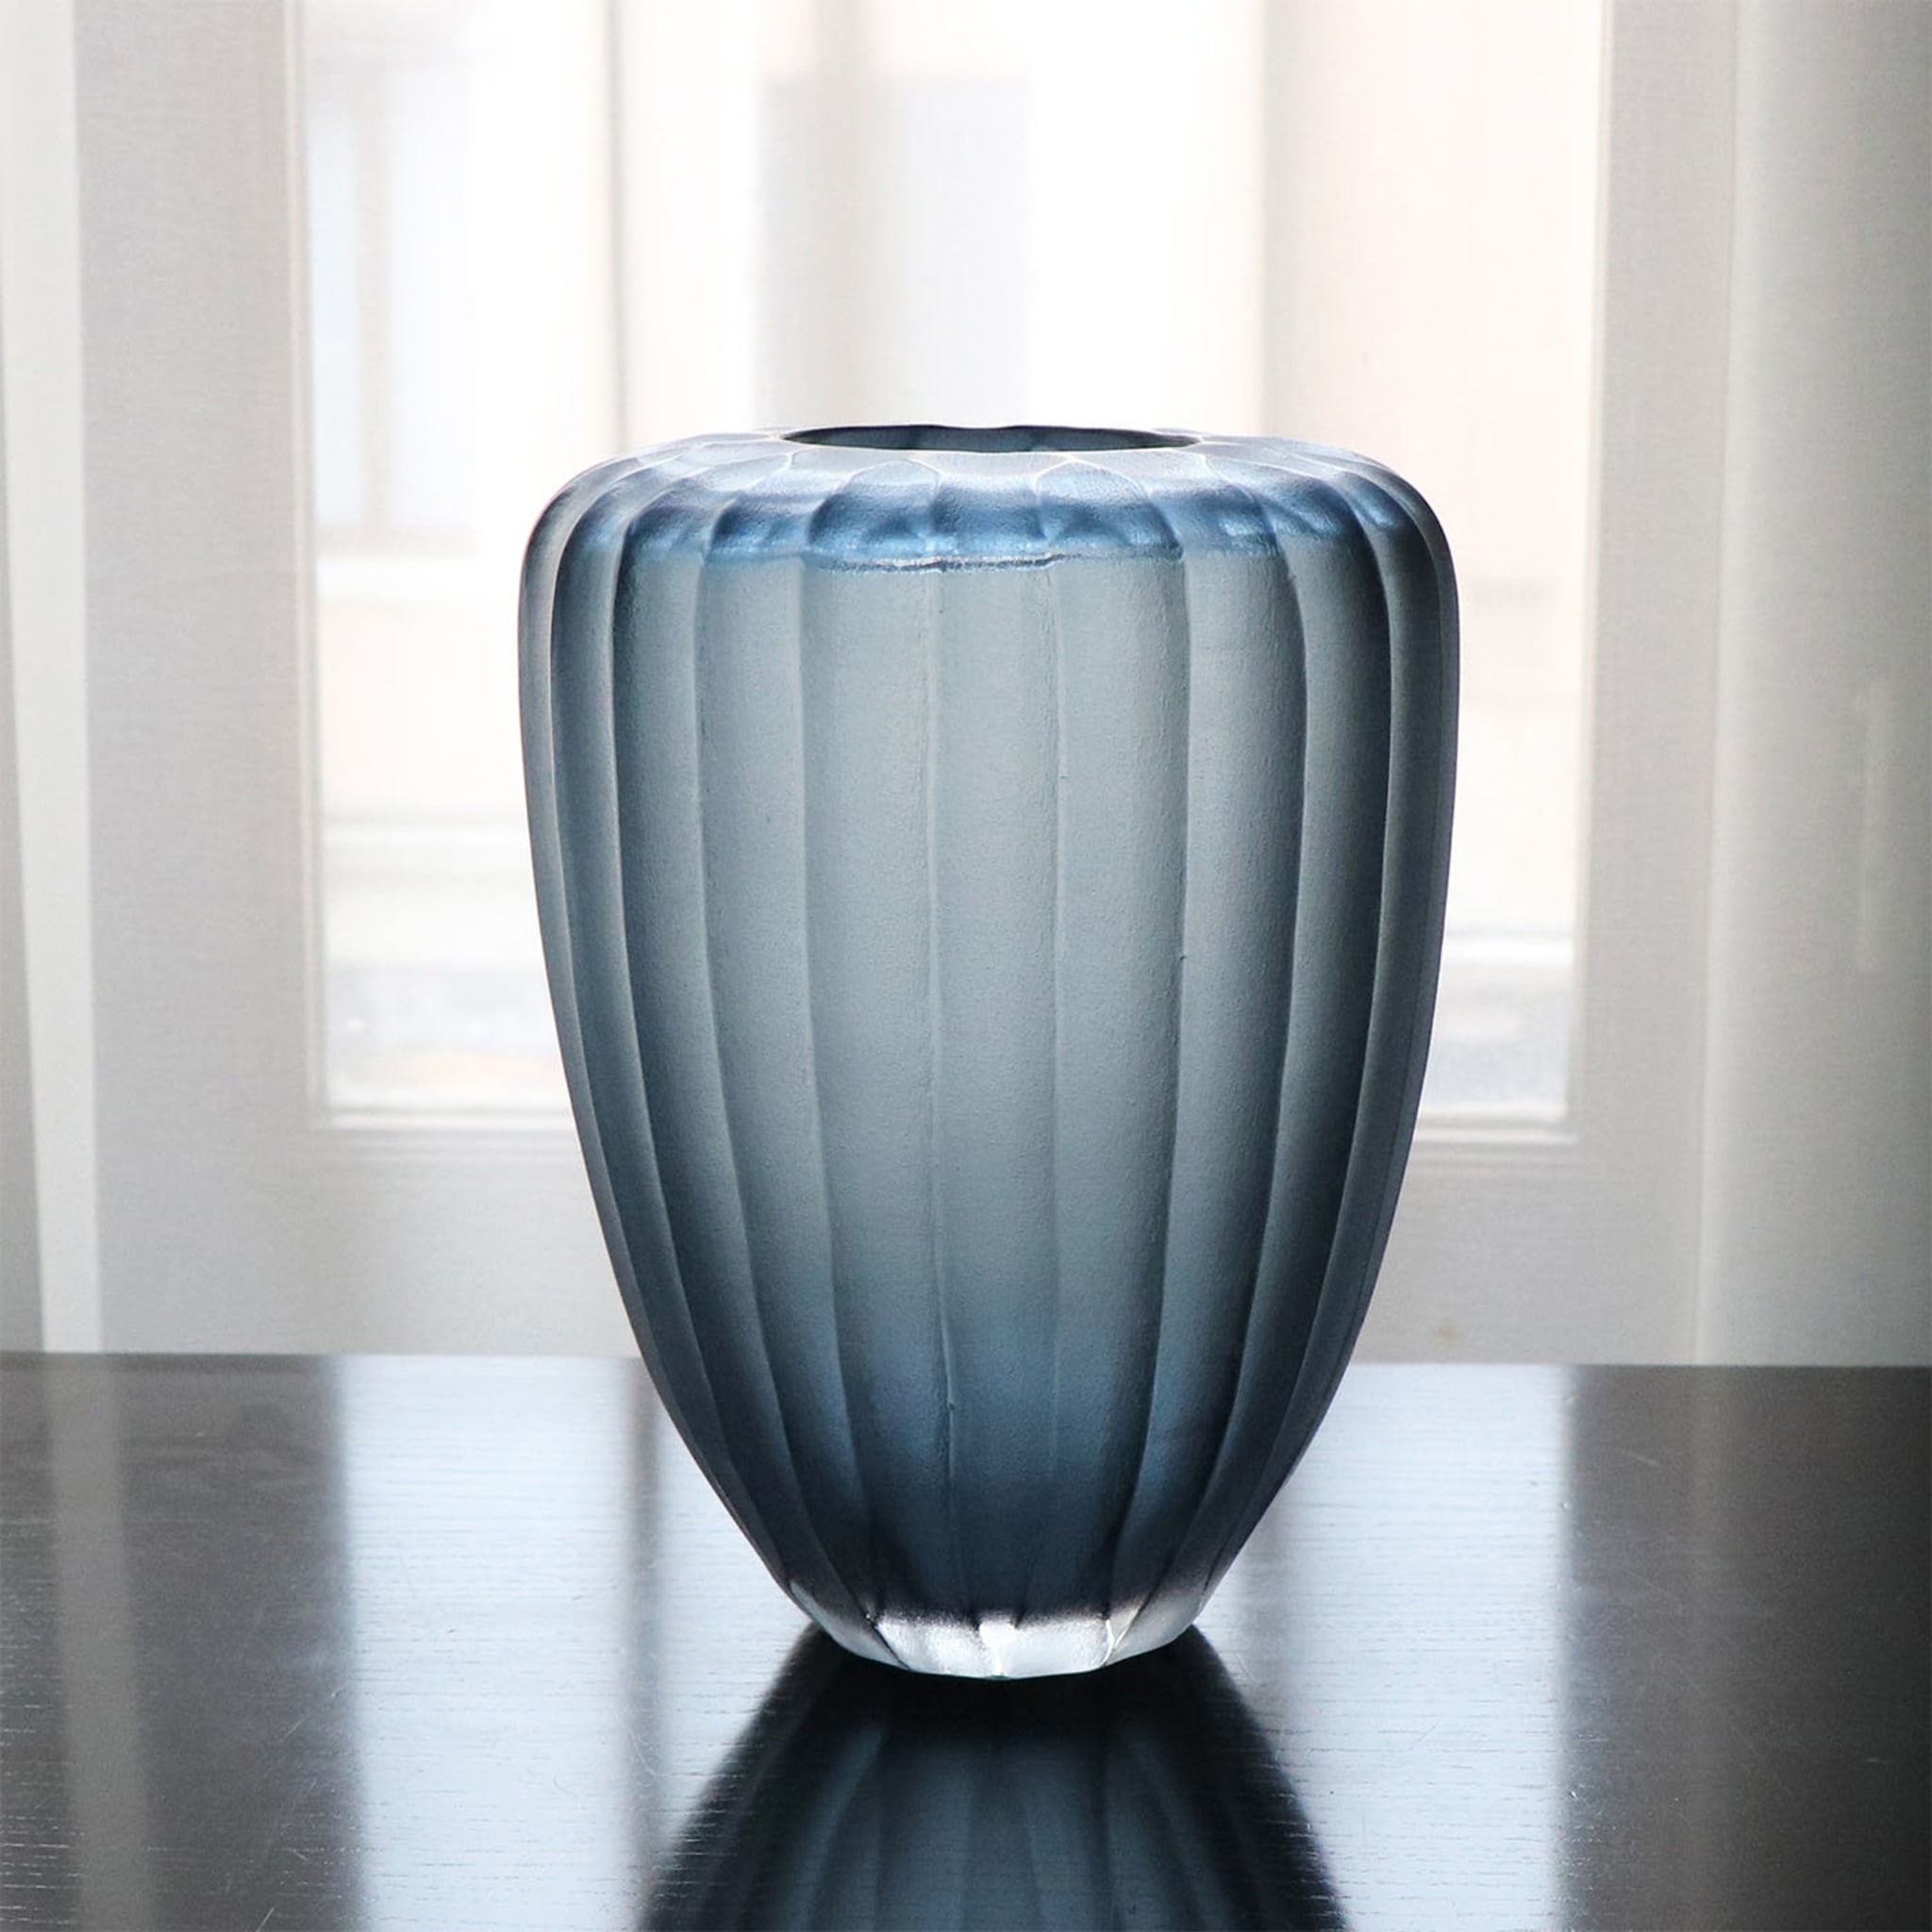 Goccia Ocean Vase #1 - Alternative view 5